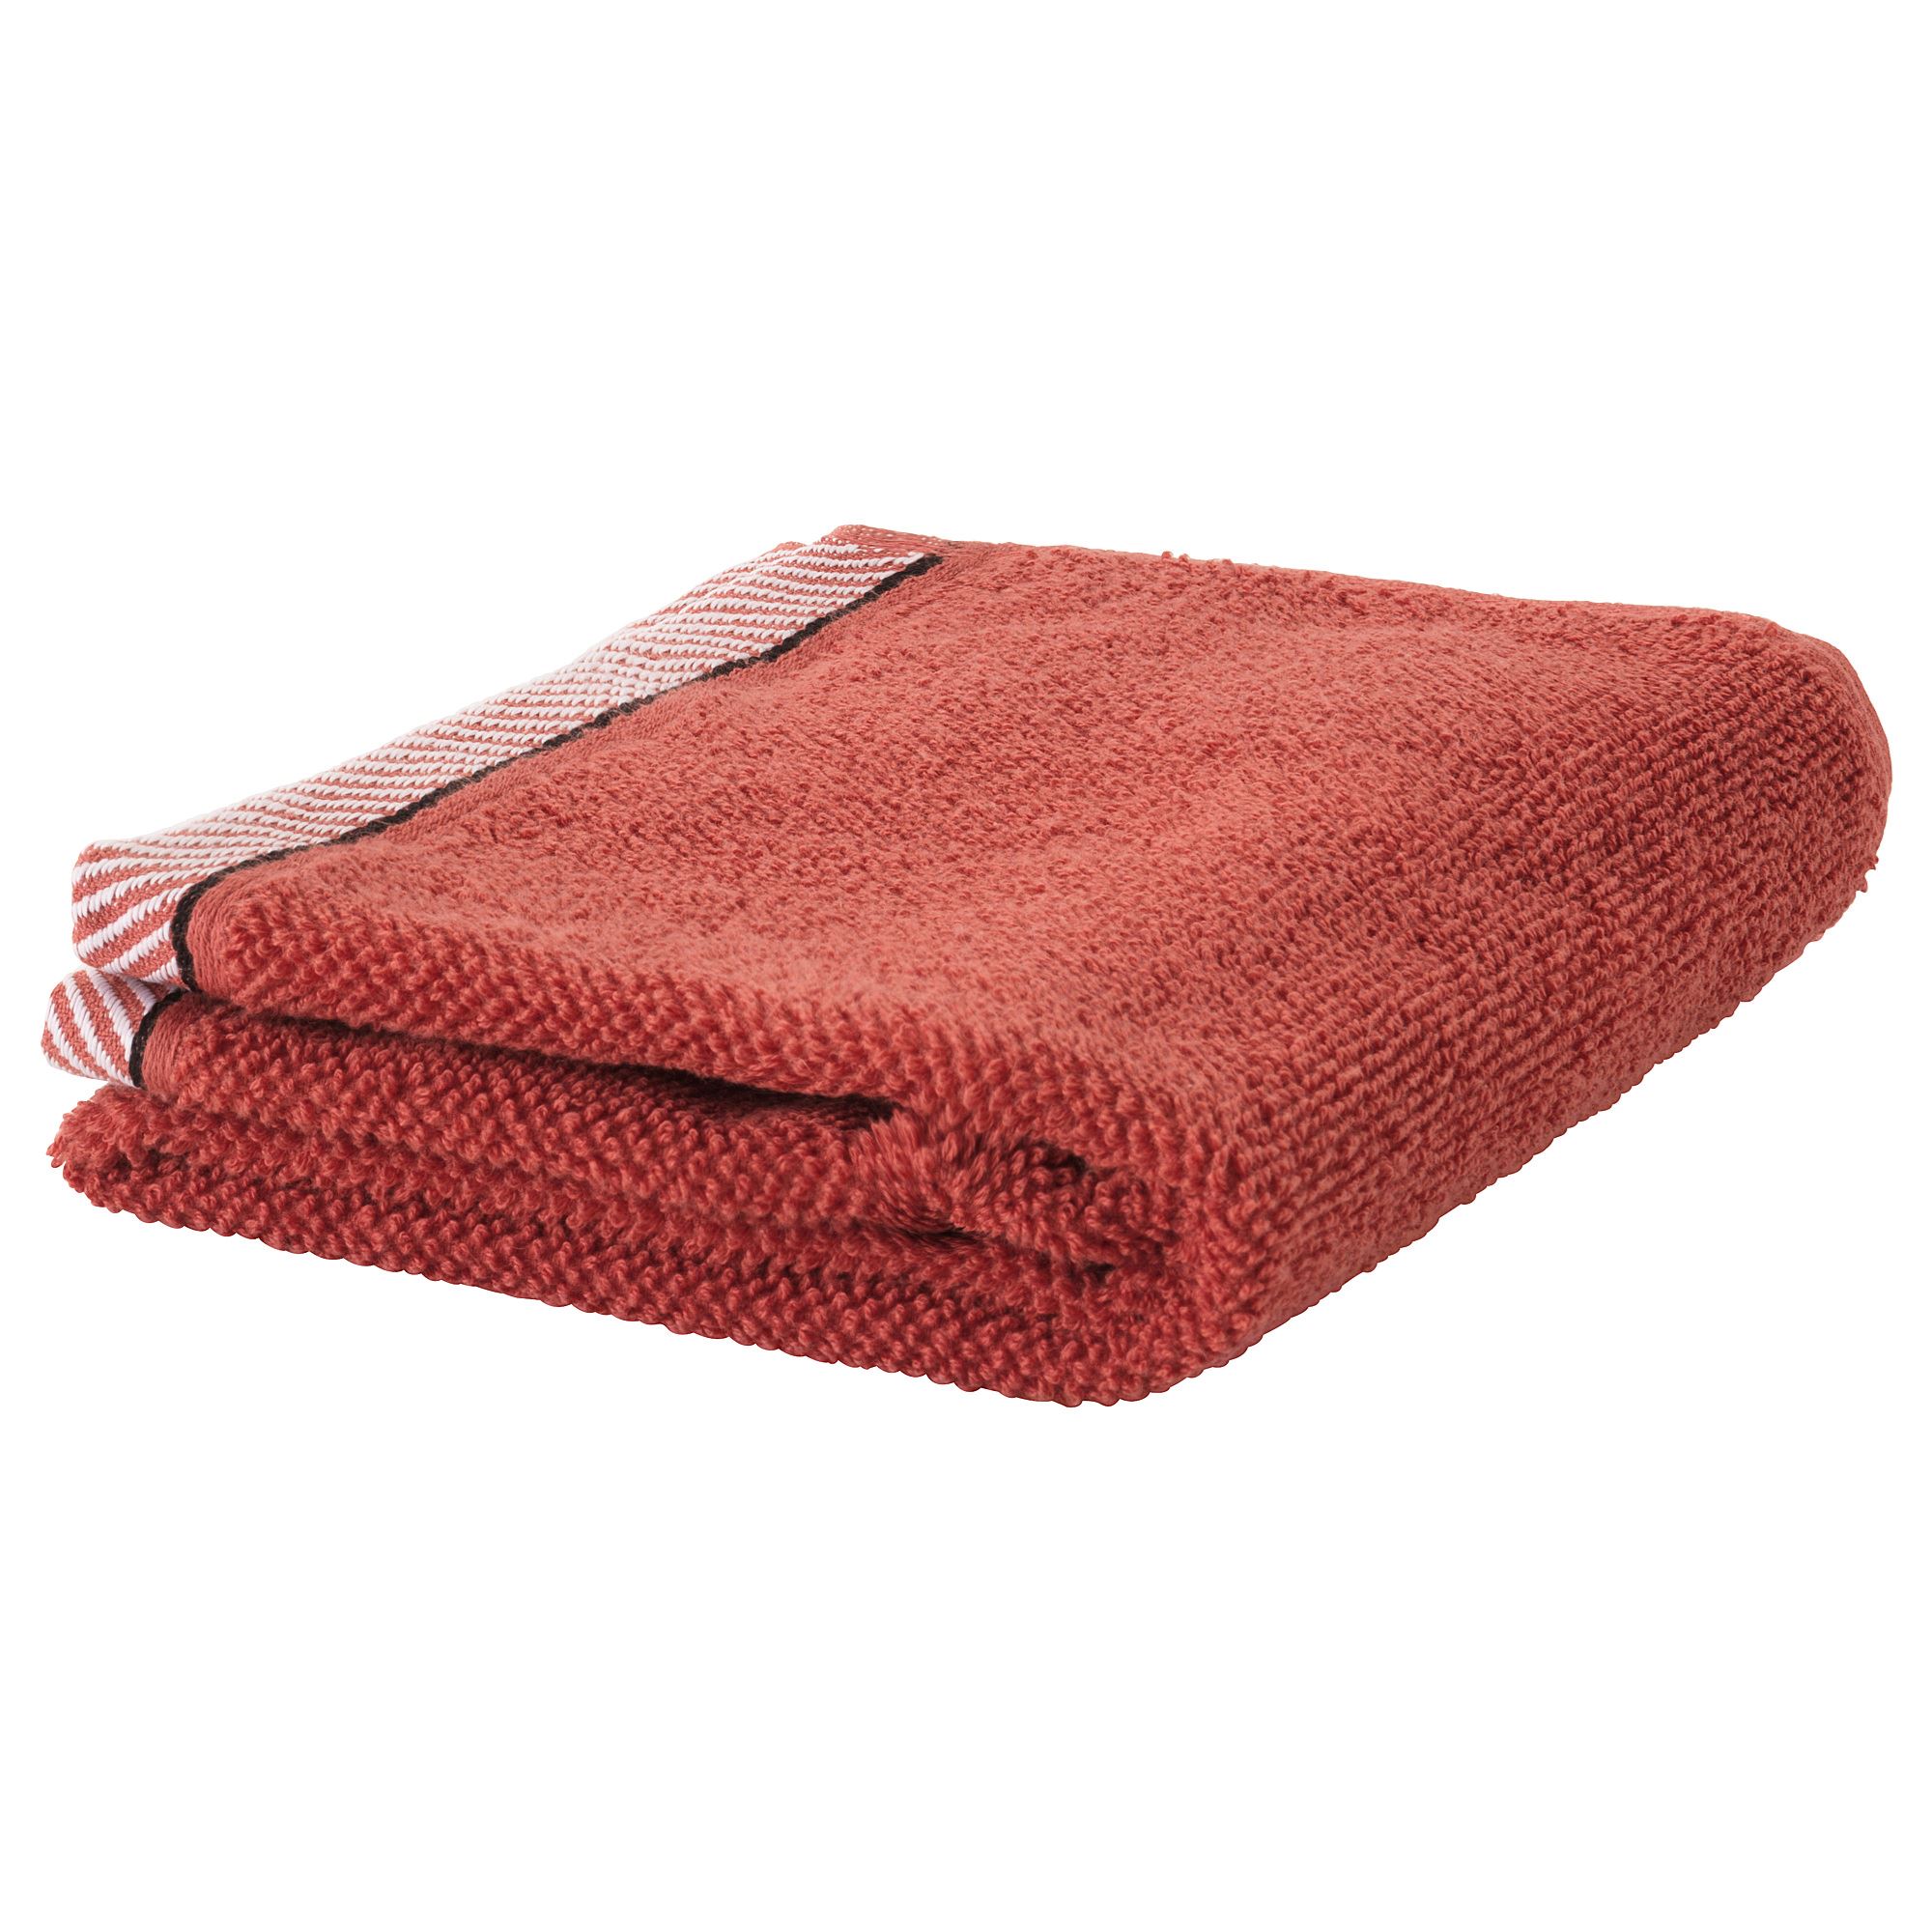 VIKFJARD hand towel red 40x70 cm  IKEA Bathroom